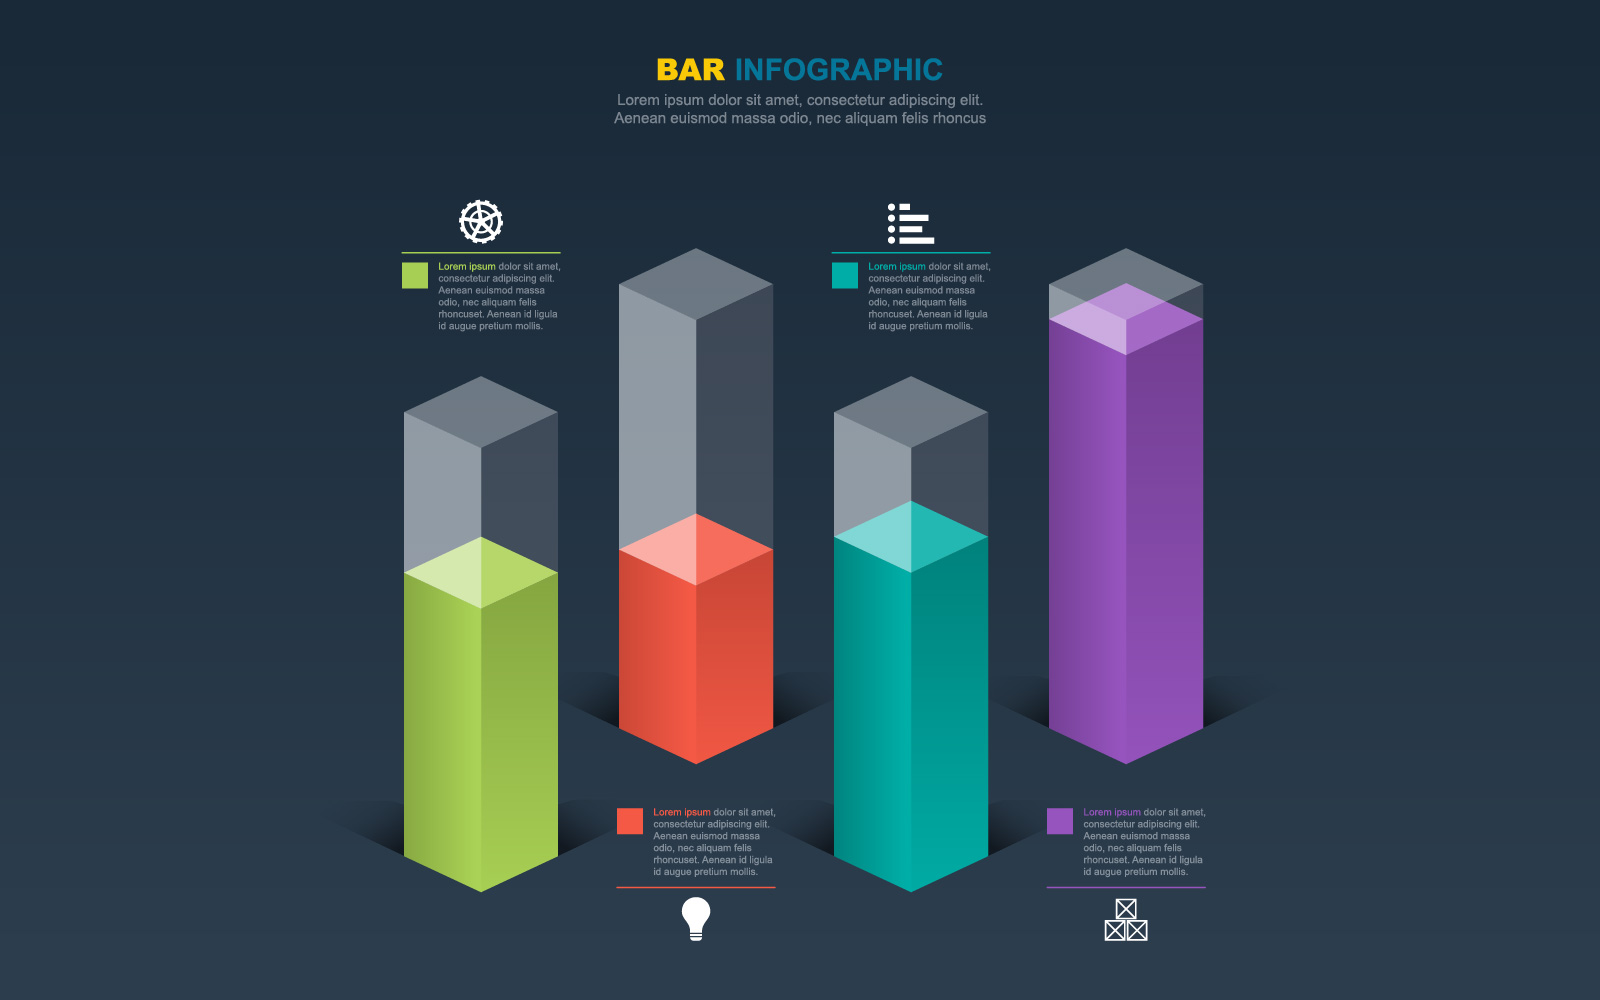 Infographic Elements